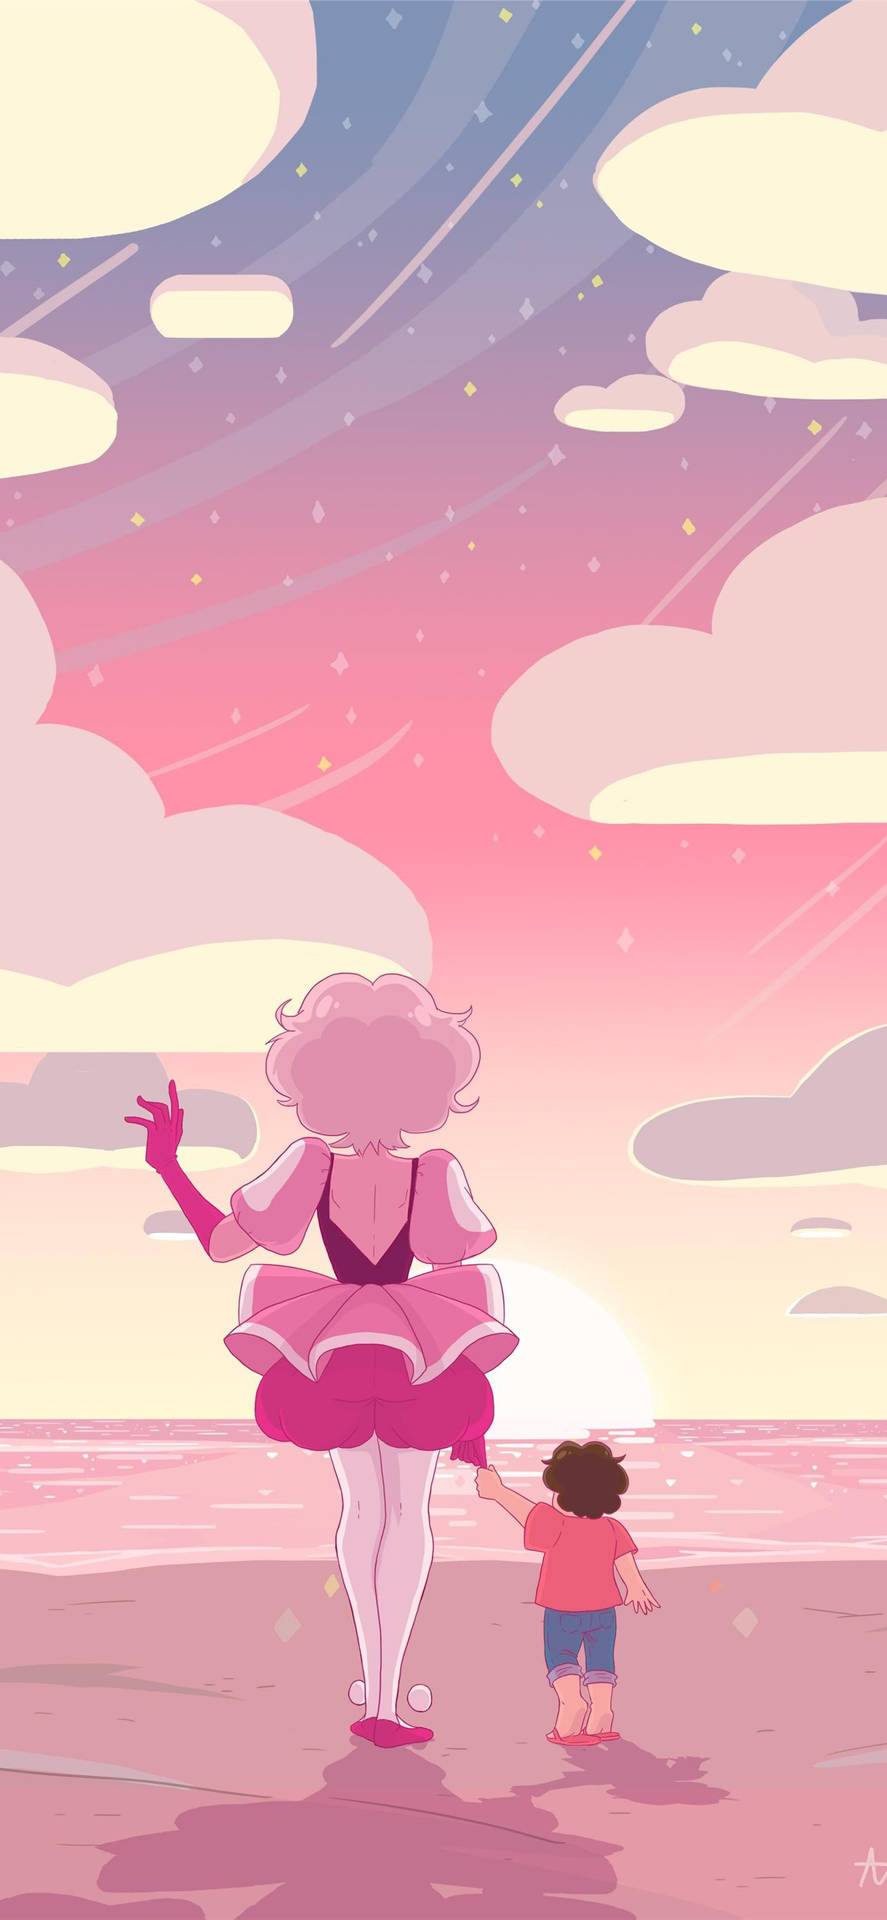 Rose Quartz And Steven Universe Ipad Background